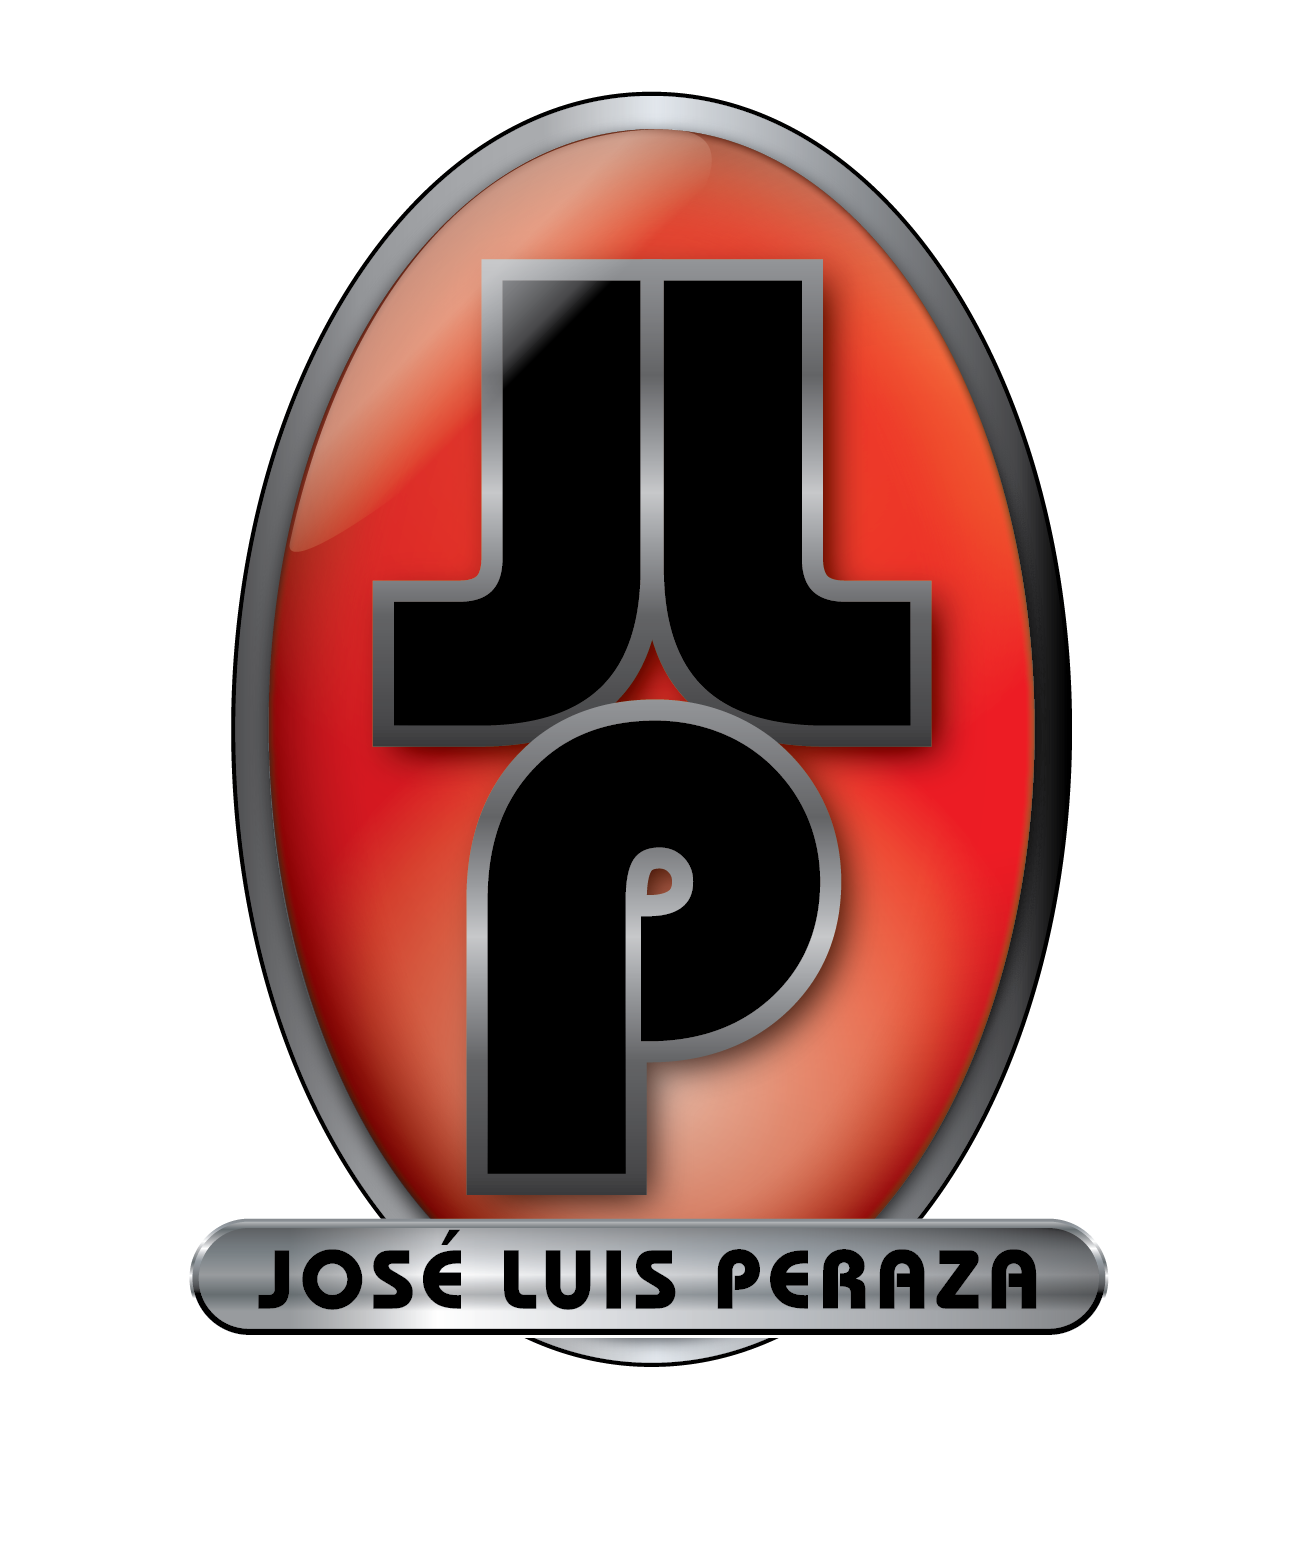 Jose Luis Peraza